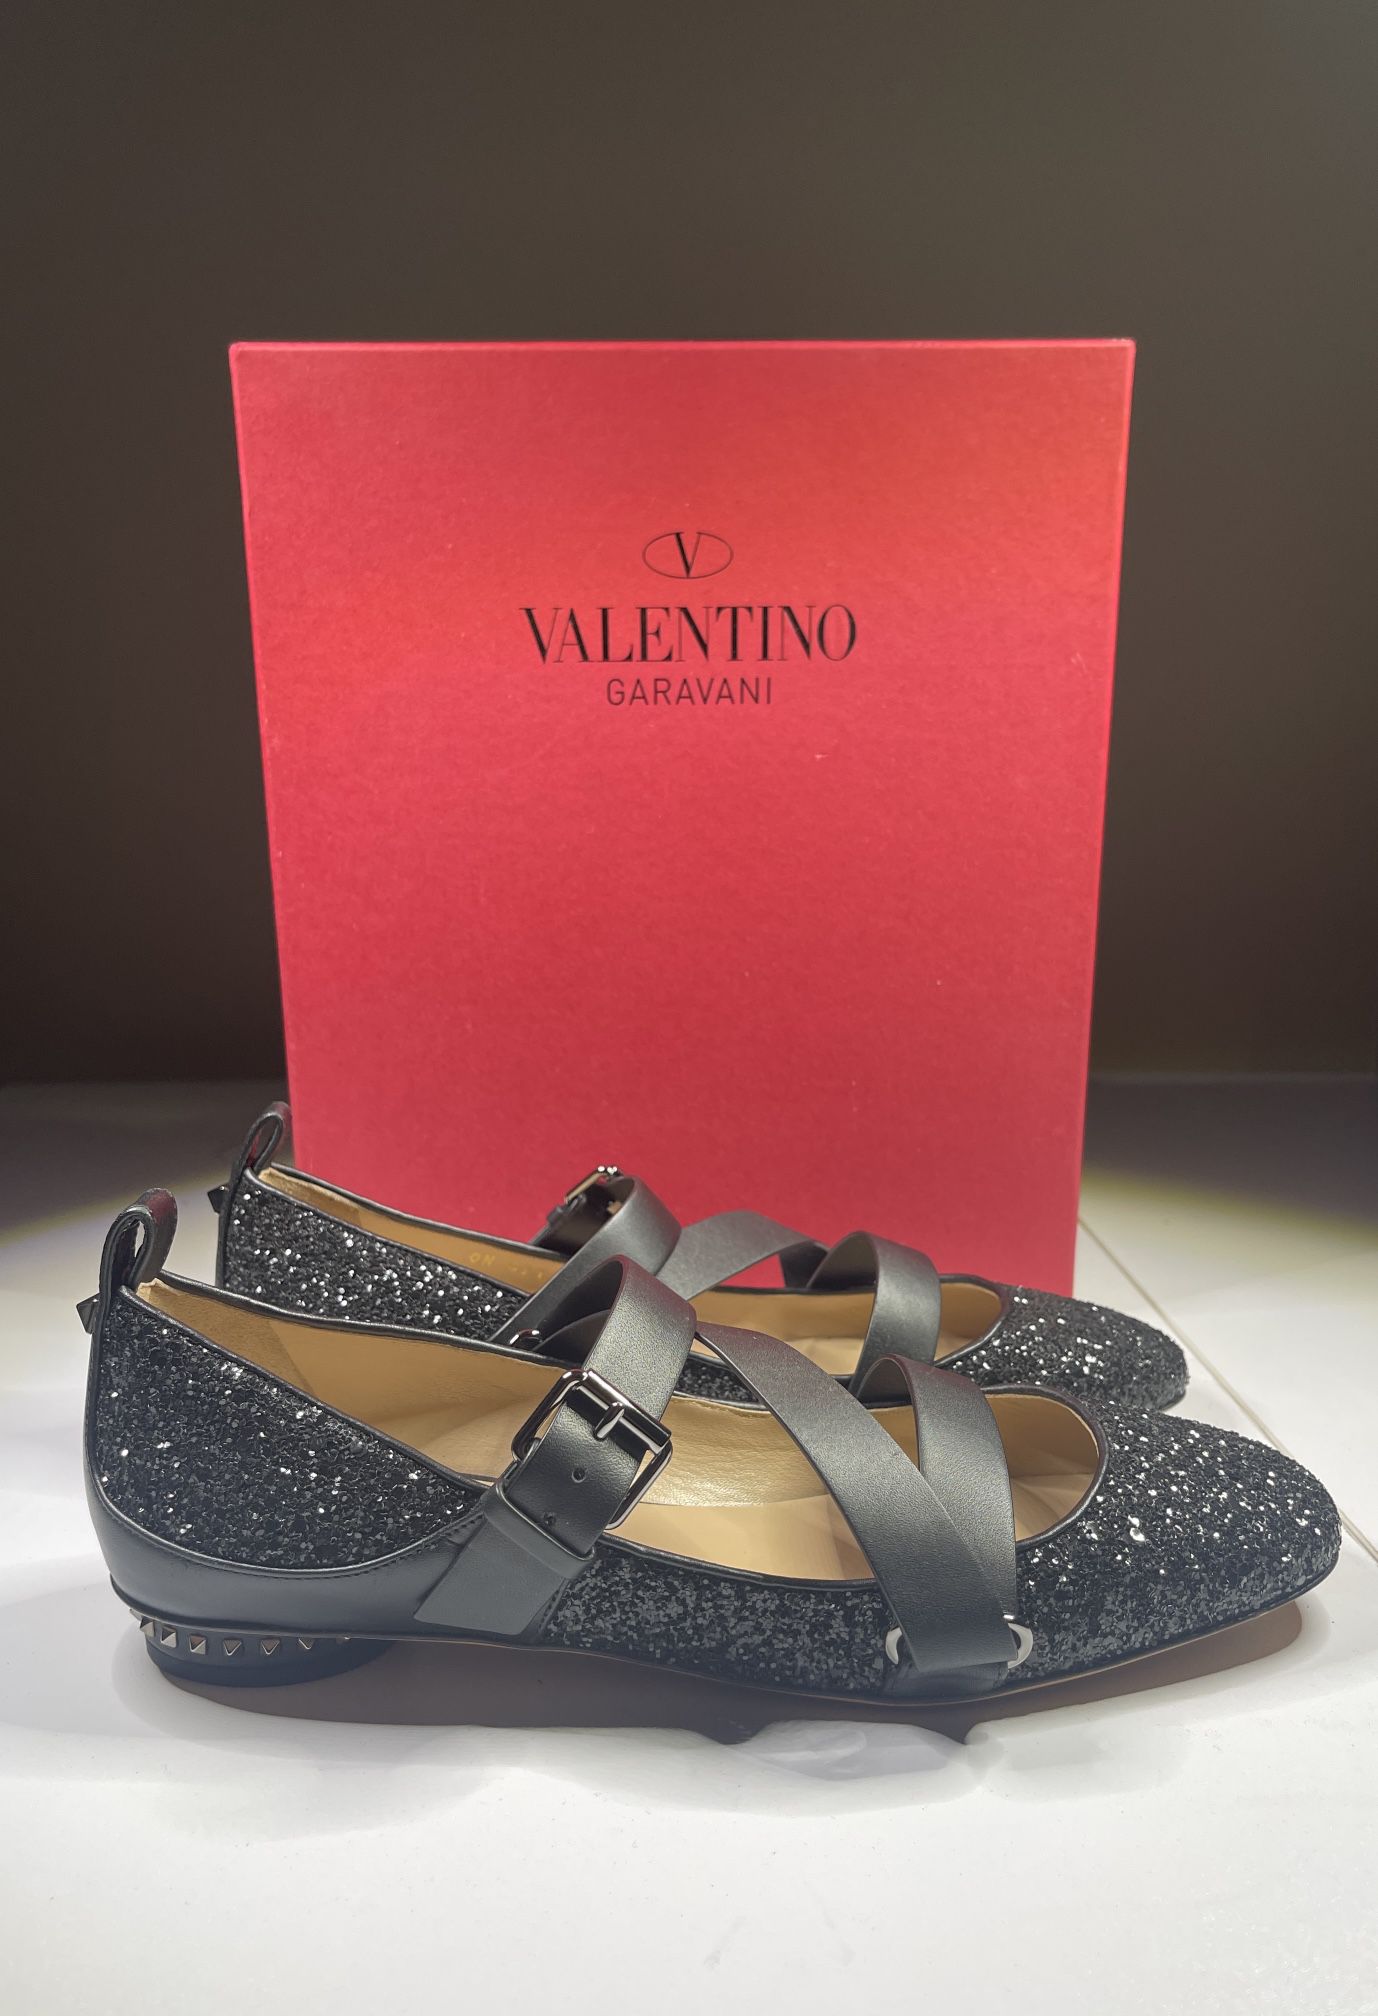 Valentino Garavani Rockstud Ballet Flats New Never Used Size Italian 38 1/2 